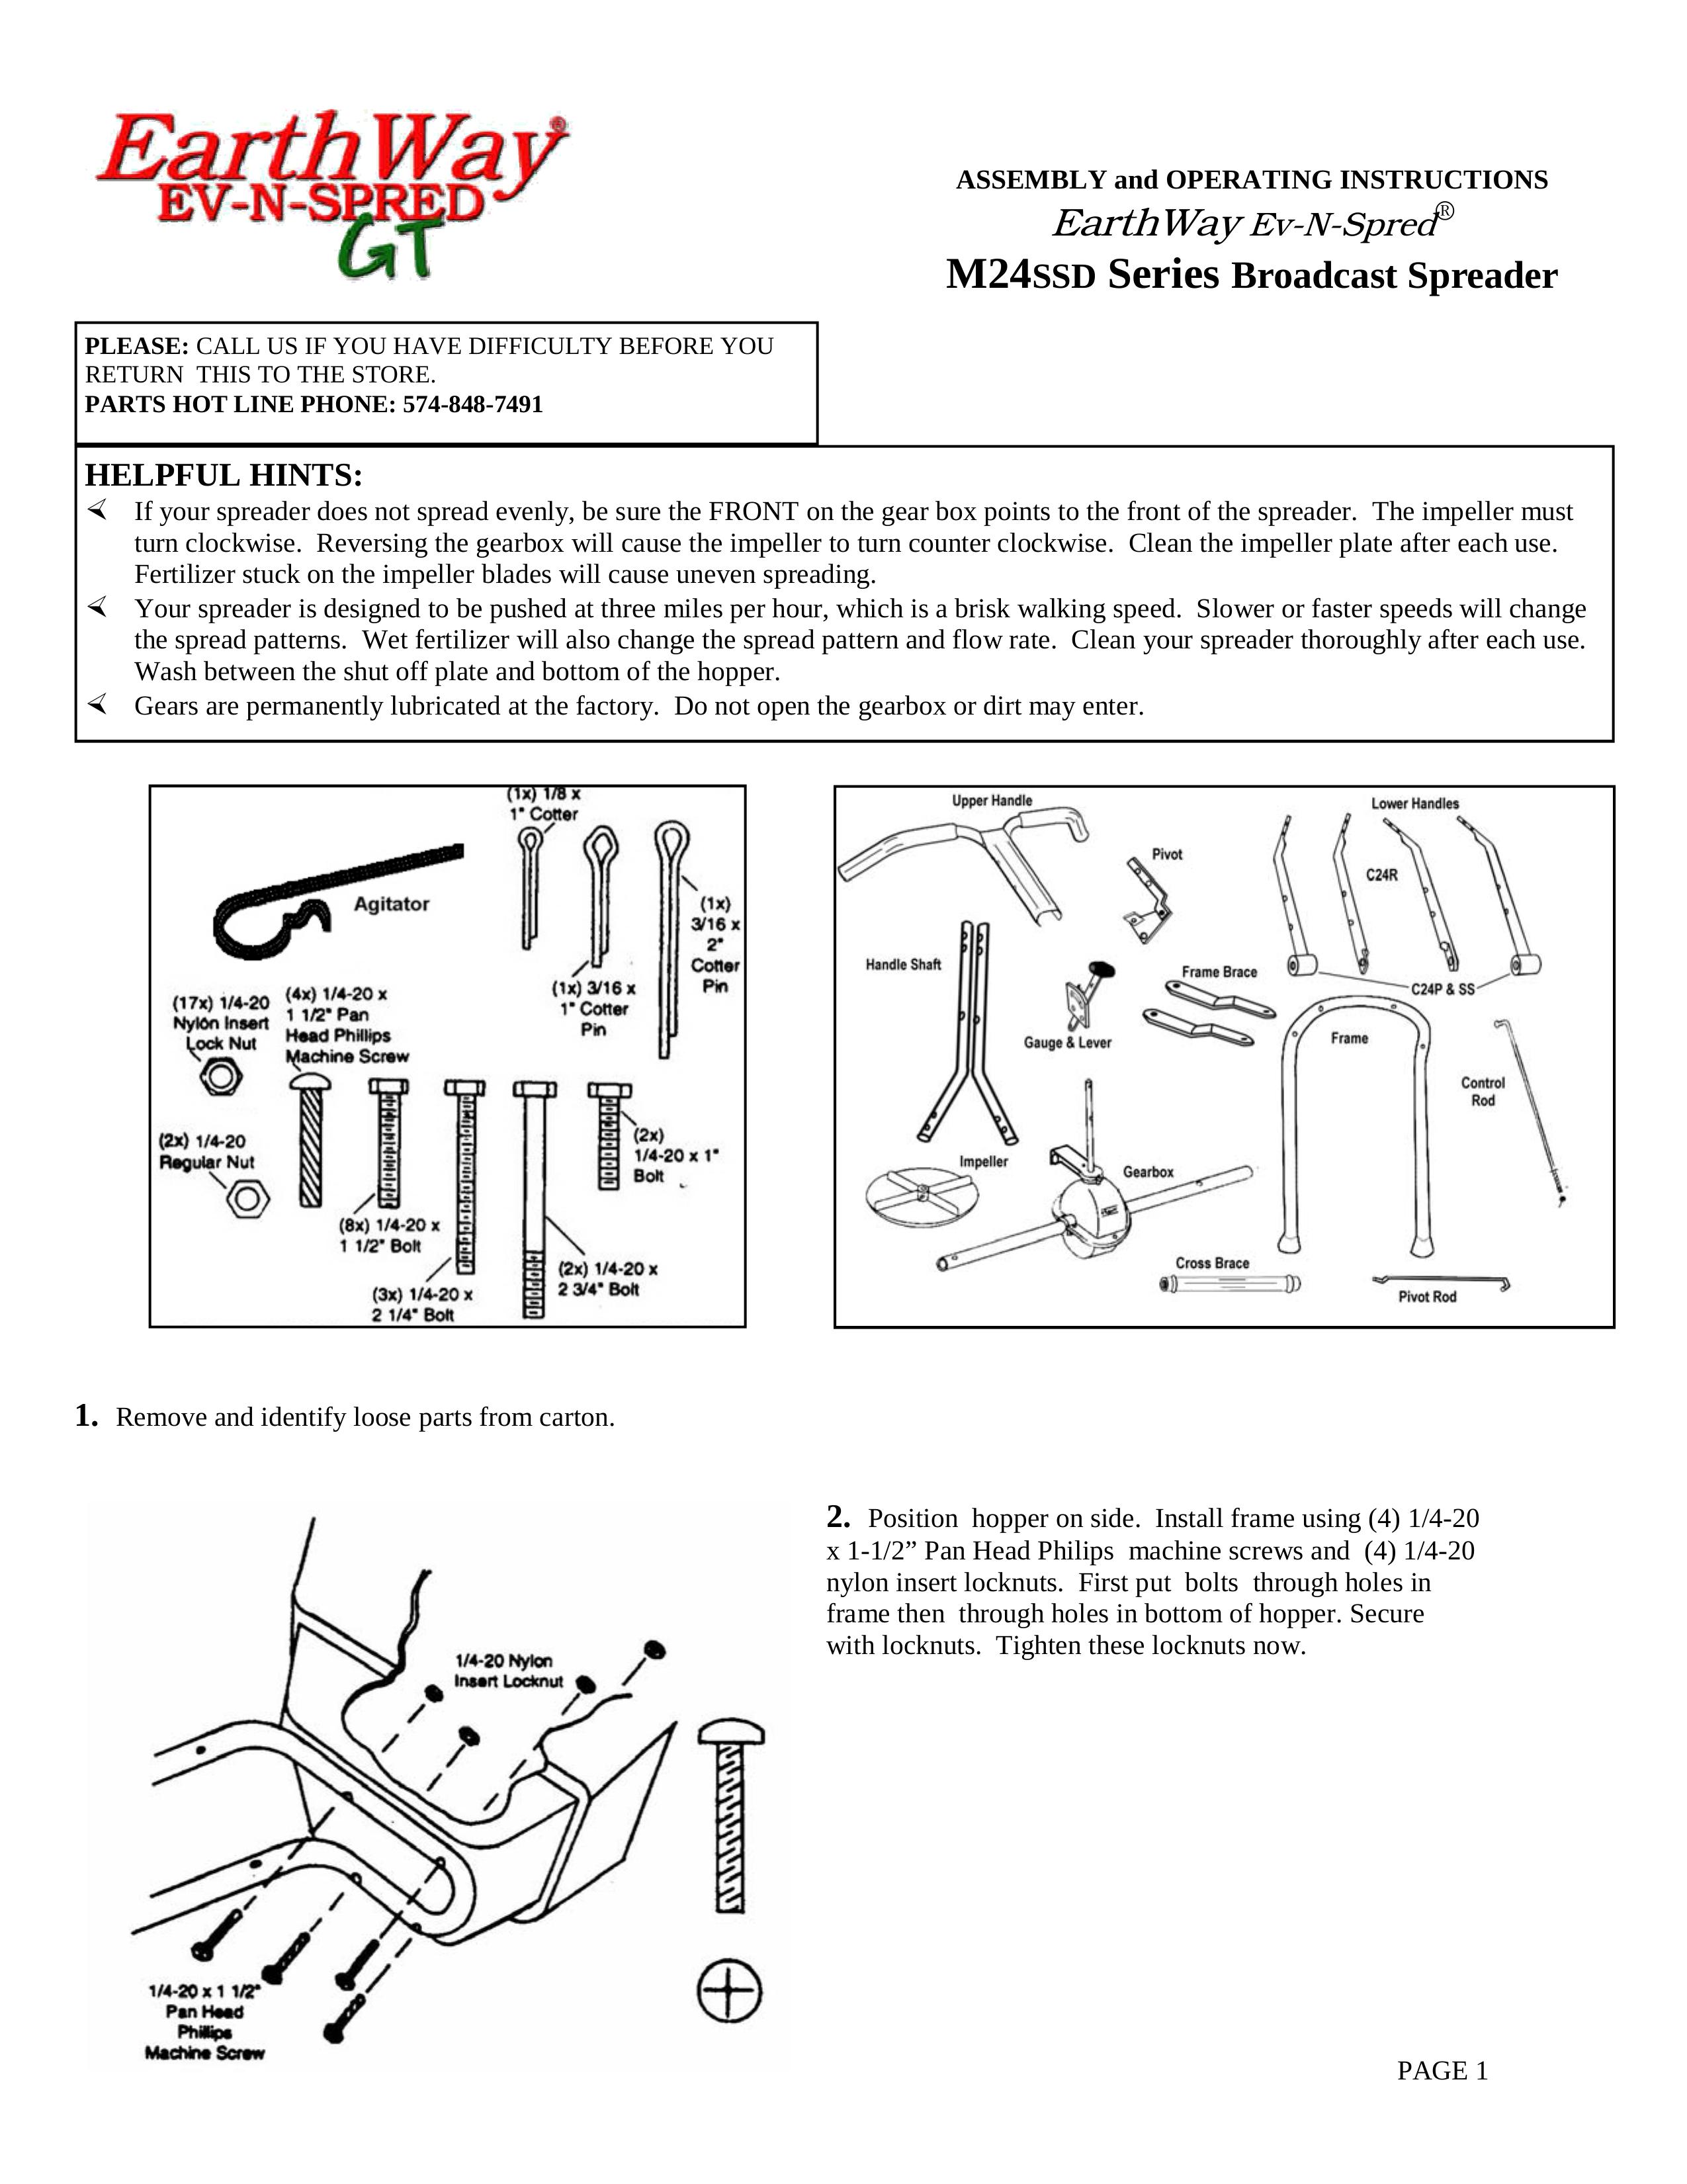 Hitachi M24SSD Spreader User Manual